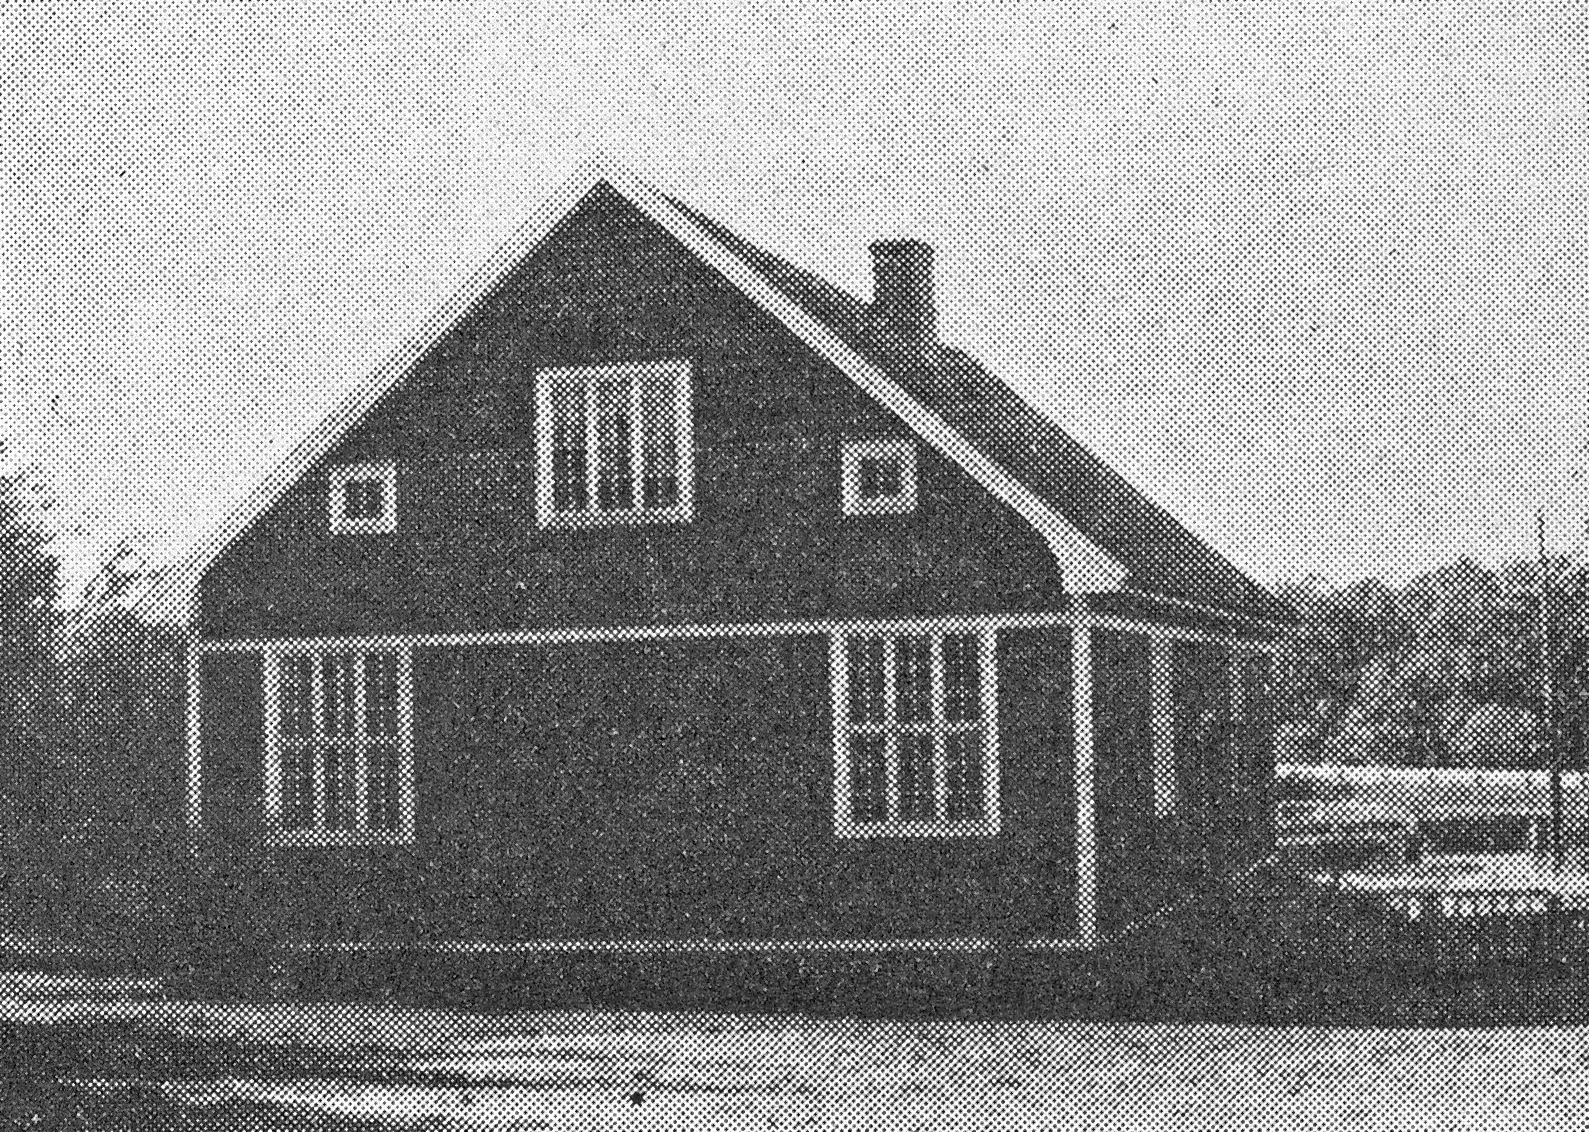 
MÃ¶ckleryds skola byggdes 1919.





